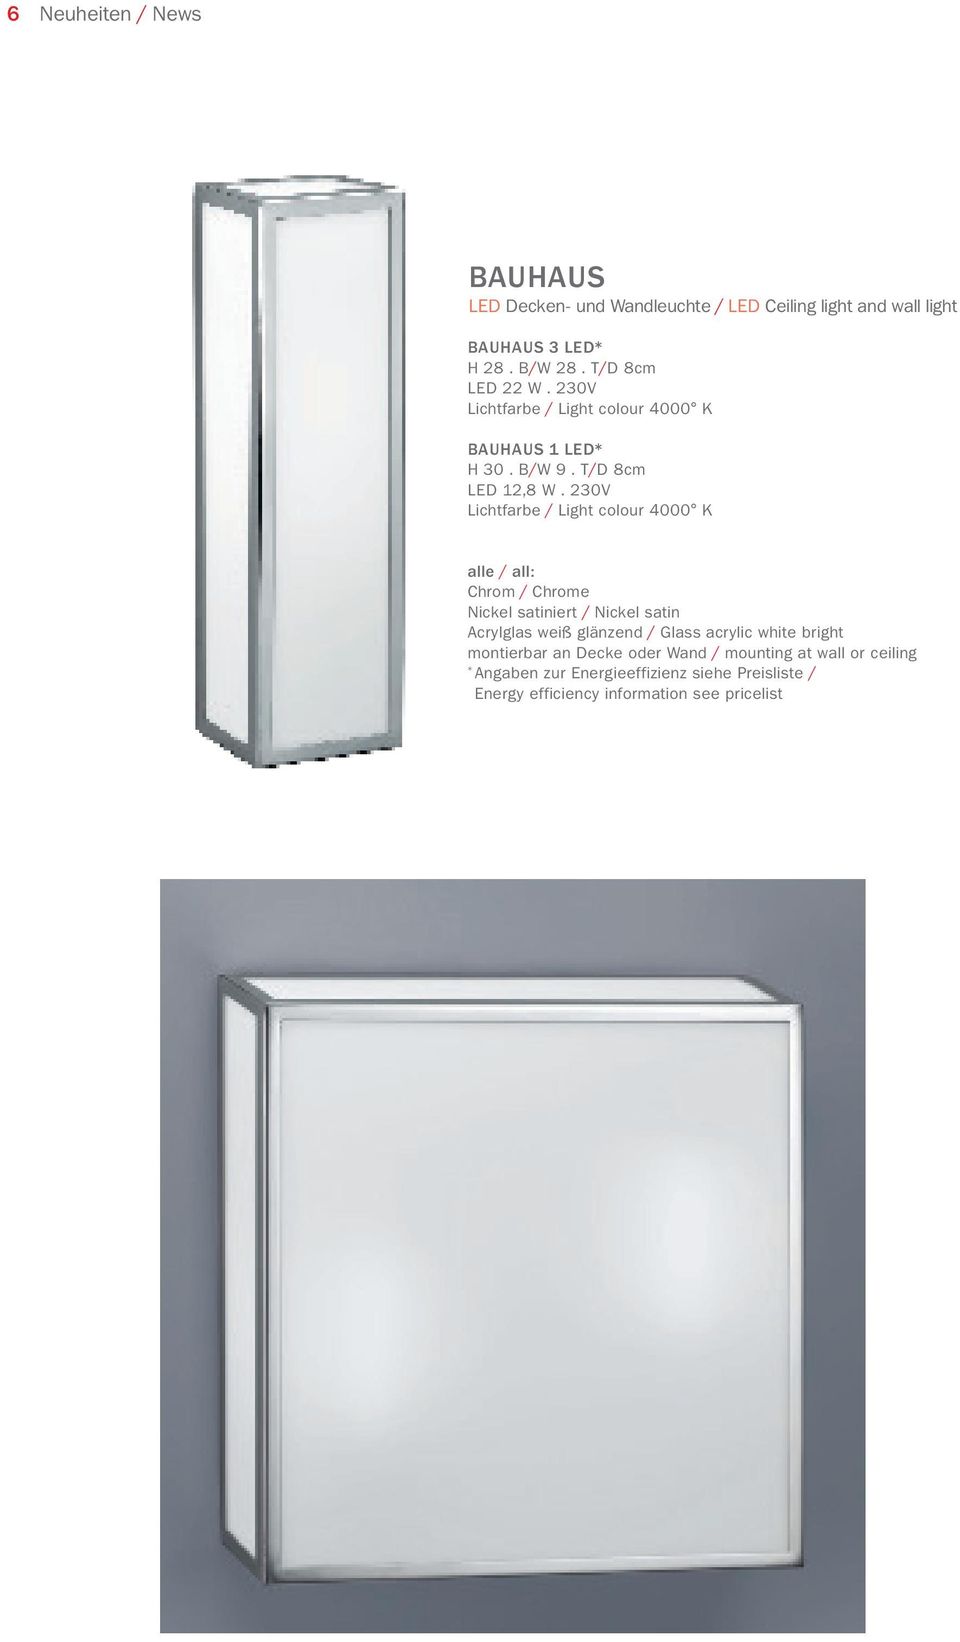 230V Lichtfarbe / Light colour 4000 K alle / all: Nickel satiniert / Nickel satin Acrylglas weiß glänzend / Glass acrylic white